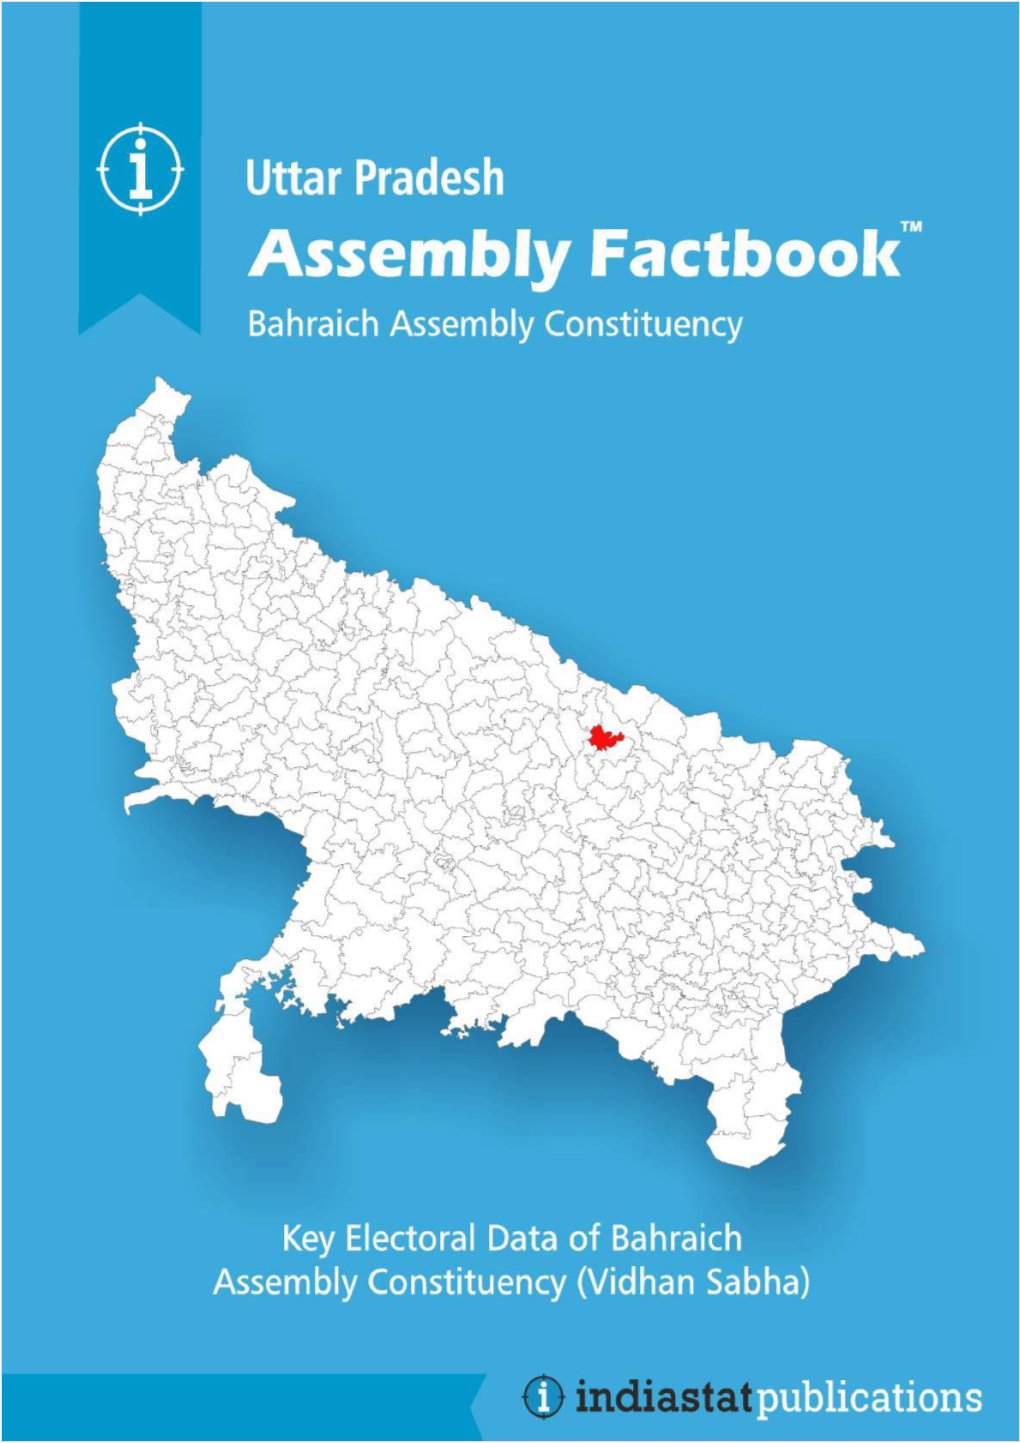 Bahraich Assembly Uttar Pradesh Factbook